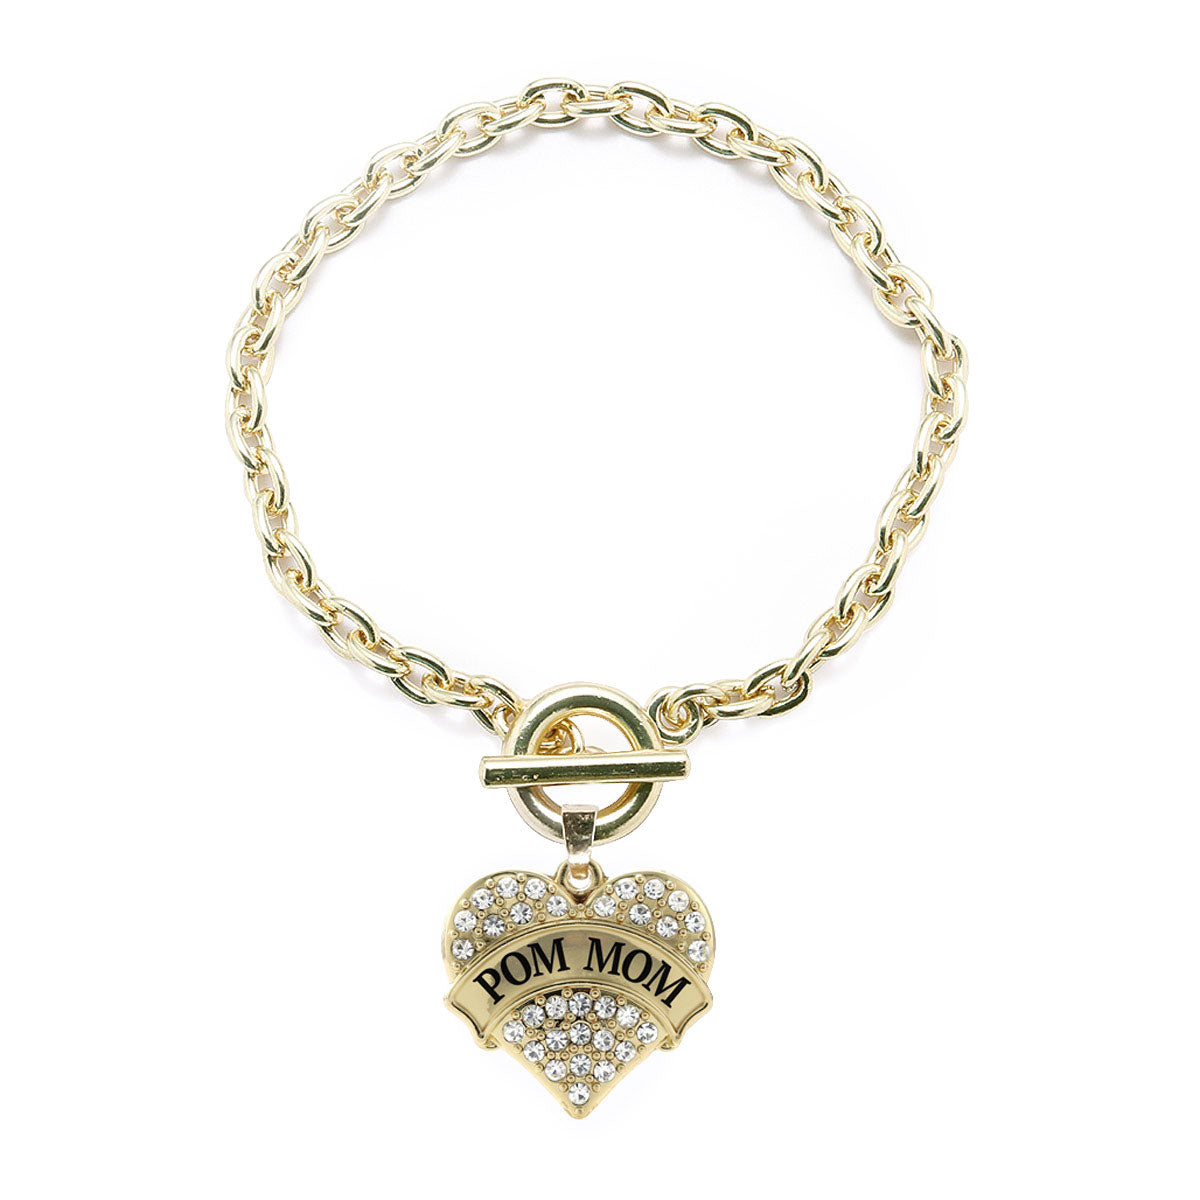 Gold Pom Mom Pave Heart Charm Toggle Bracelet